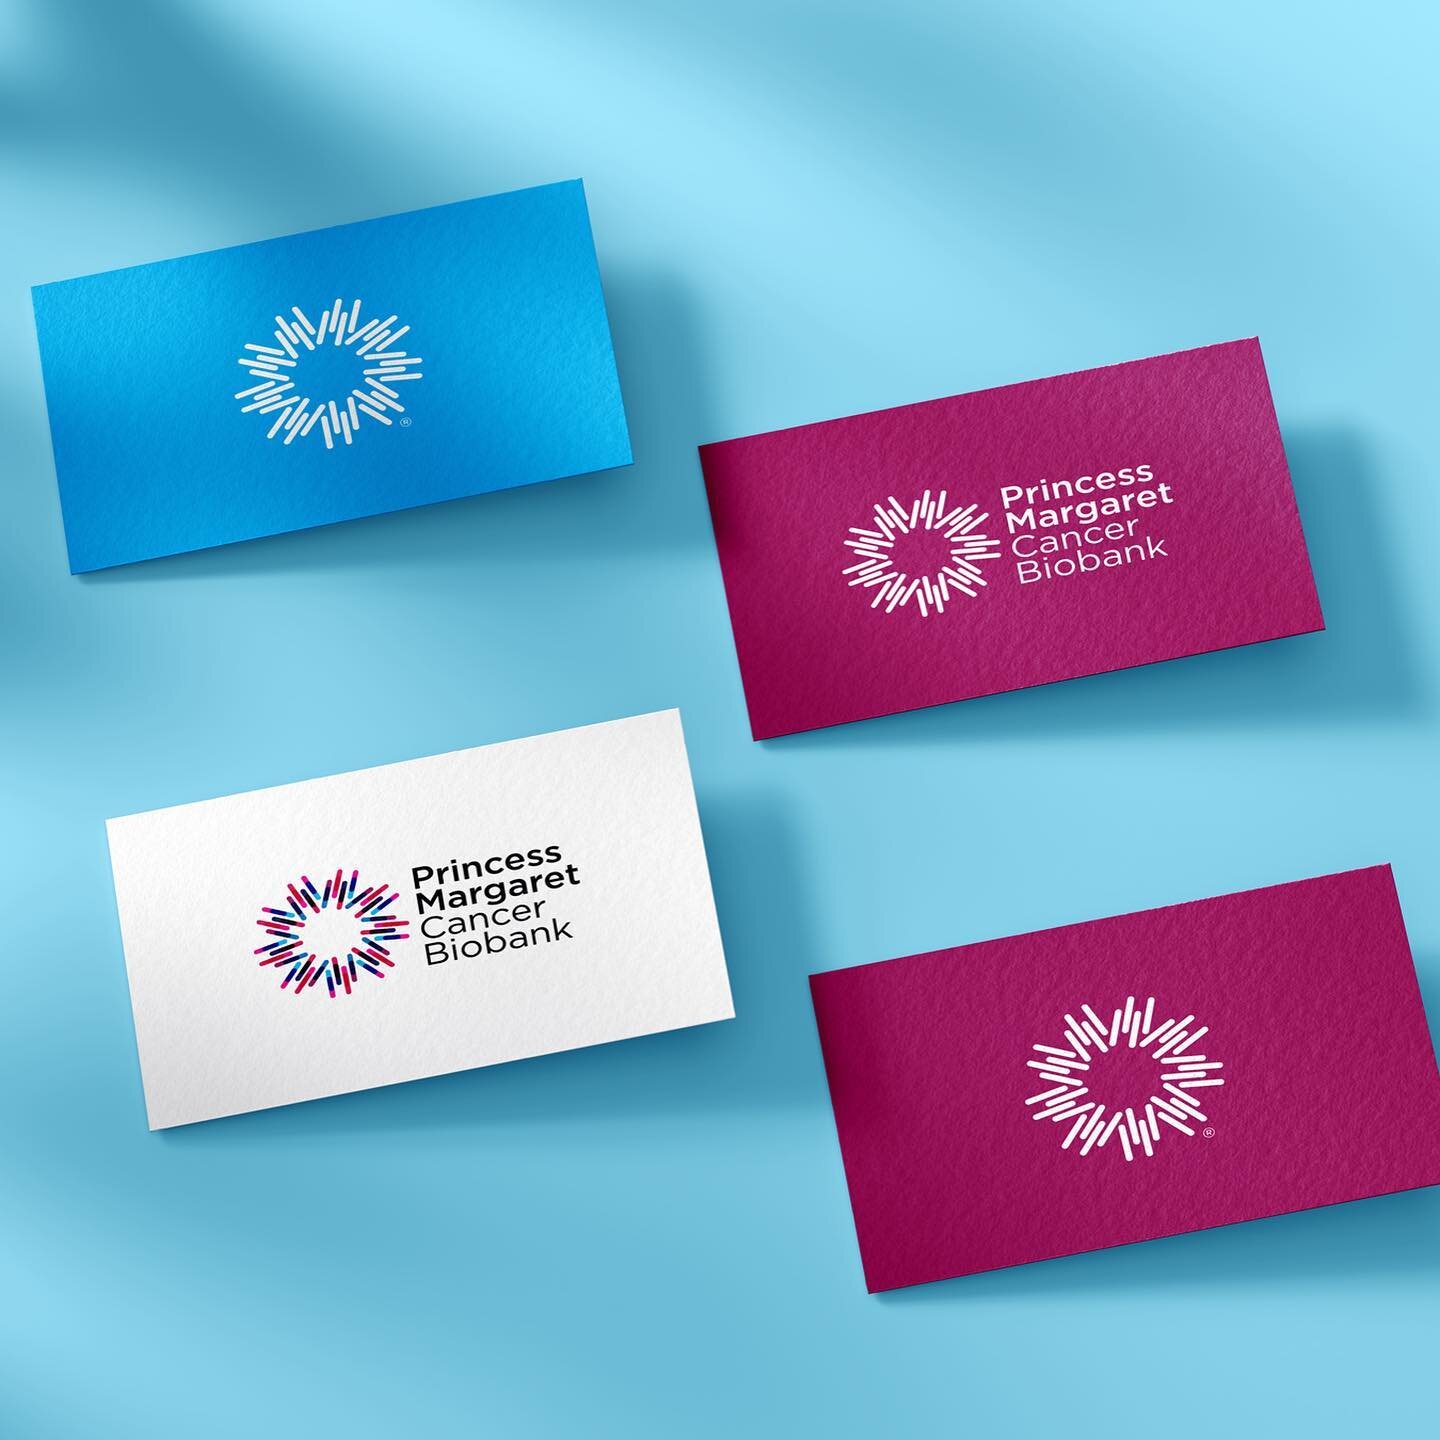 Princess Margaret Cancer Biobank Branding. 
.
.
#Biobank #Design #Adobe #Branding #Logo #Asset #Create #Illustrator #Vector #GraphicDesign #Blue #Magenta